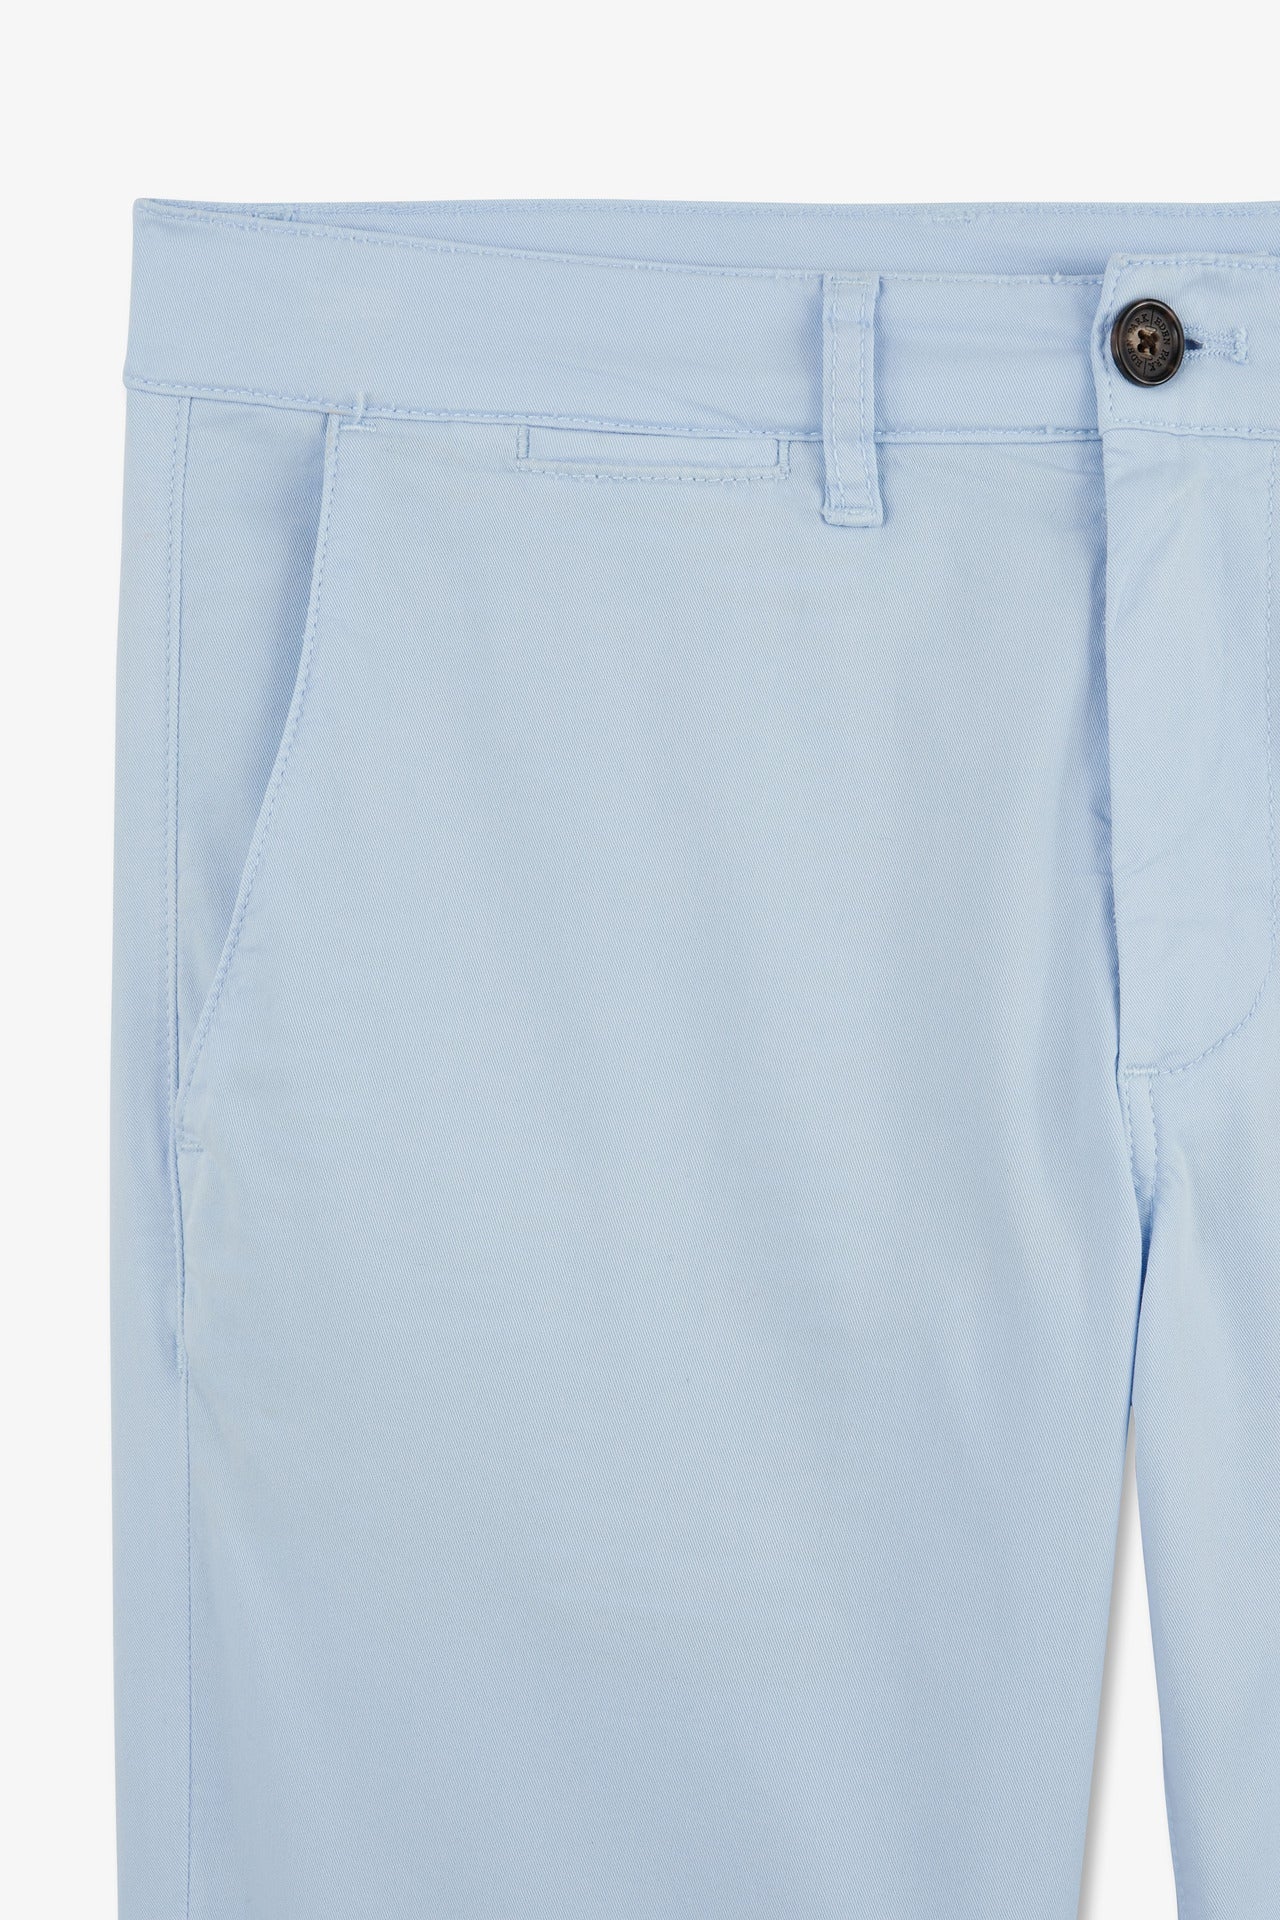 Pantalon chino bleu clair - Image 6